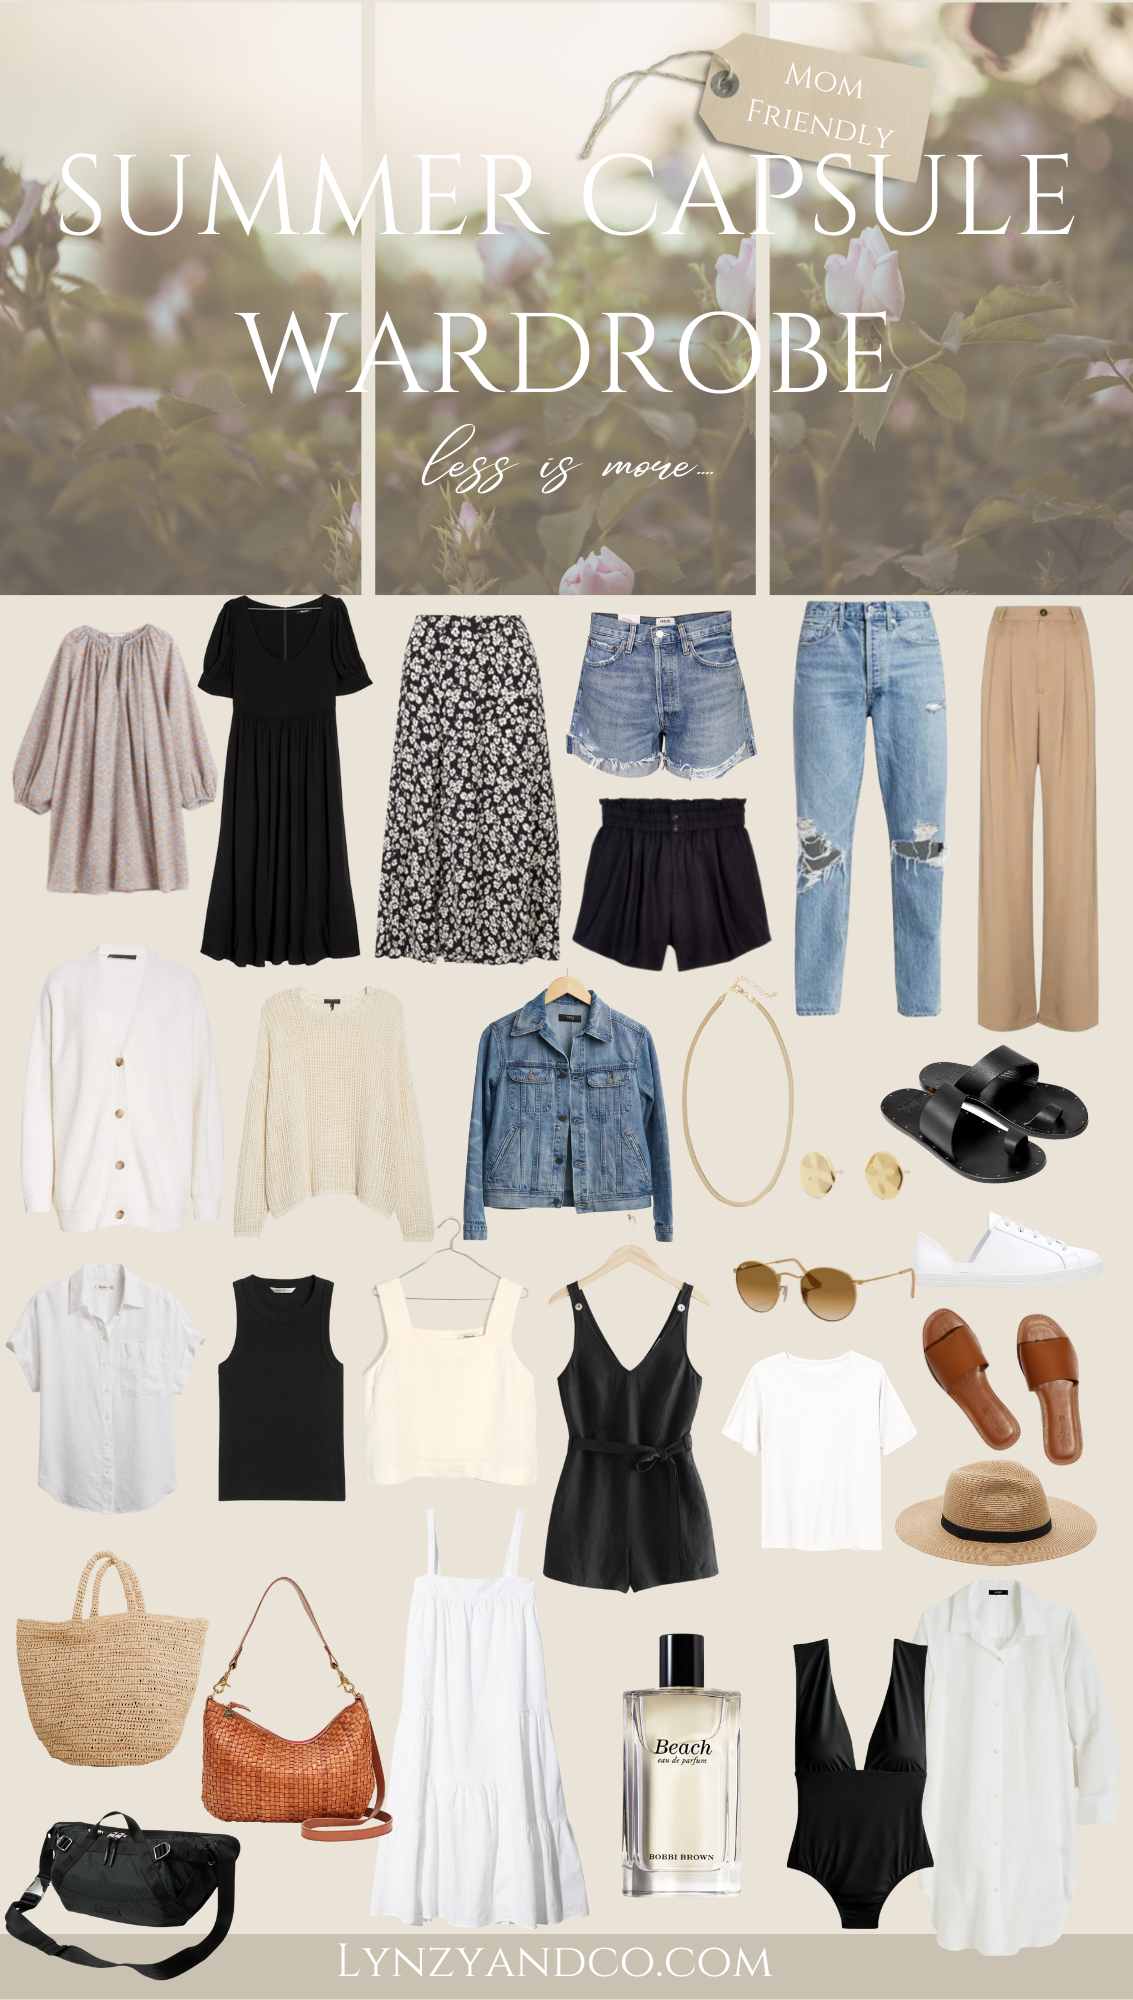 2022 Summer Capsule Wardrobe + Outfit Ideas - Lynzy & Co.